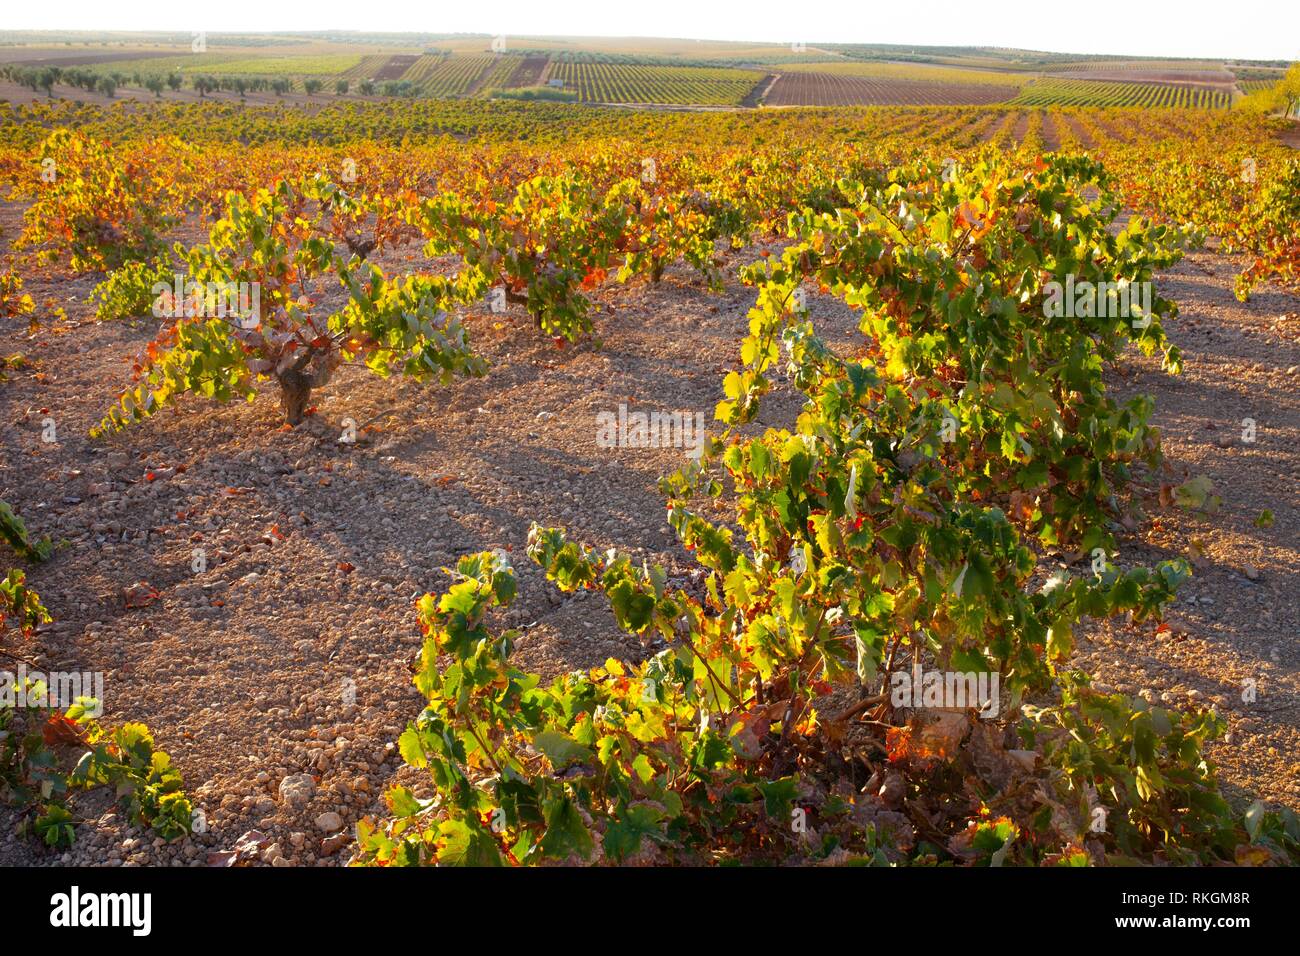 Vines plantation under october sunset light at wine growing region of Tierra de Barros, Extremadura, Spain. Stock Photo